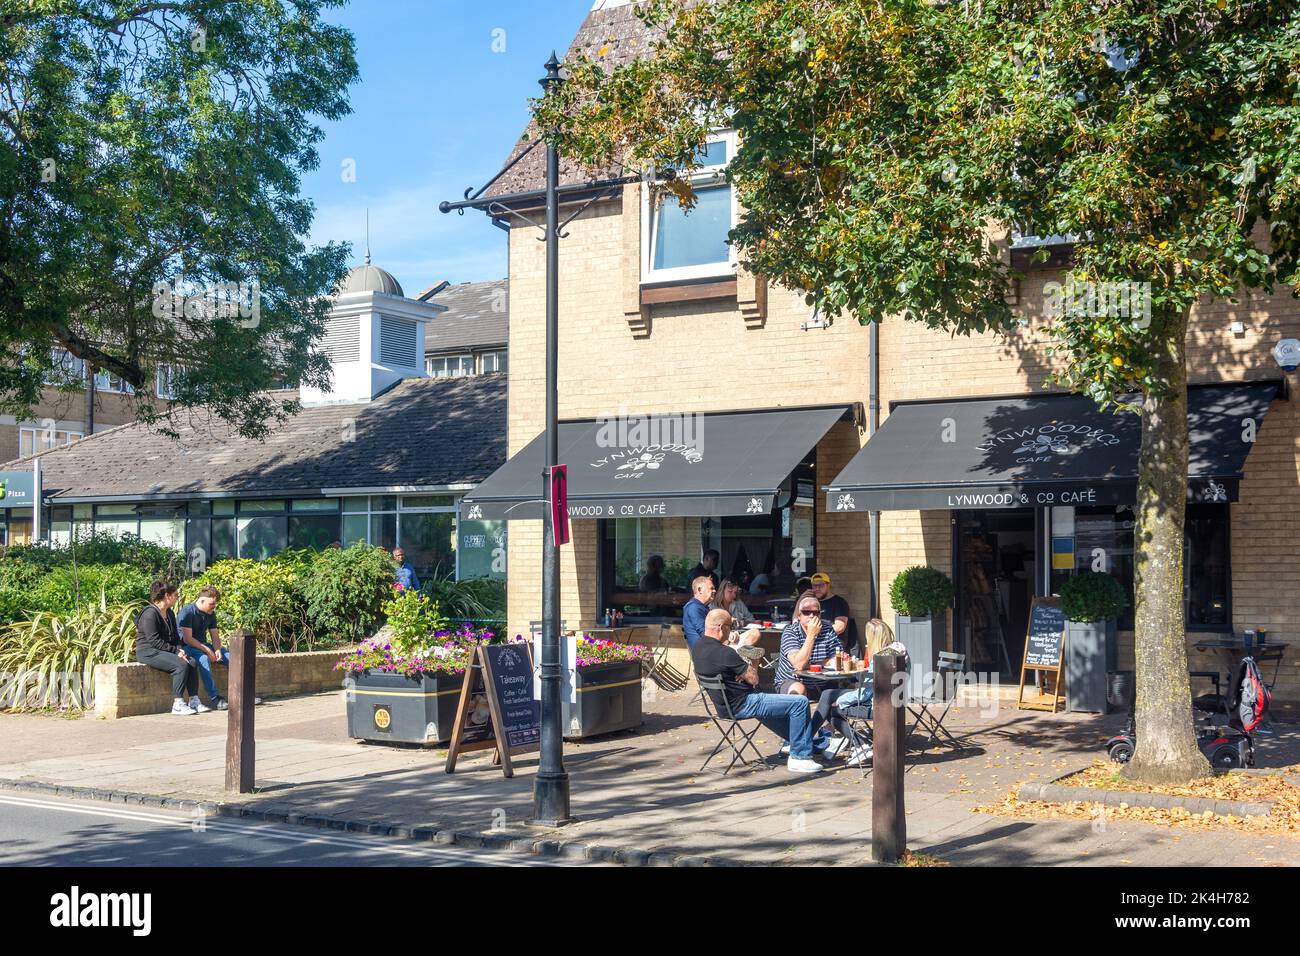 Lynwood & Co Cafe, Alvescot Road, Carterton, Oxfordshire, England, United Kingdom Stock Photo